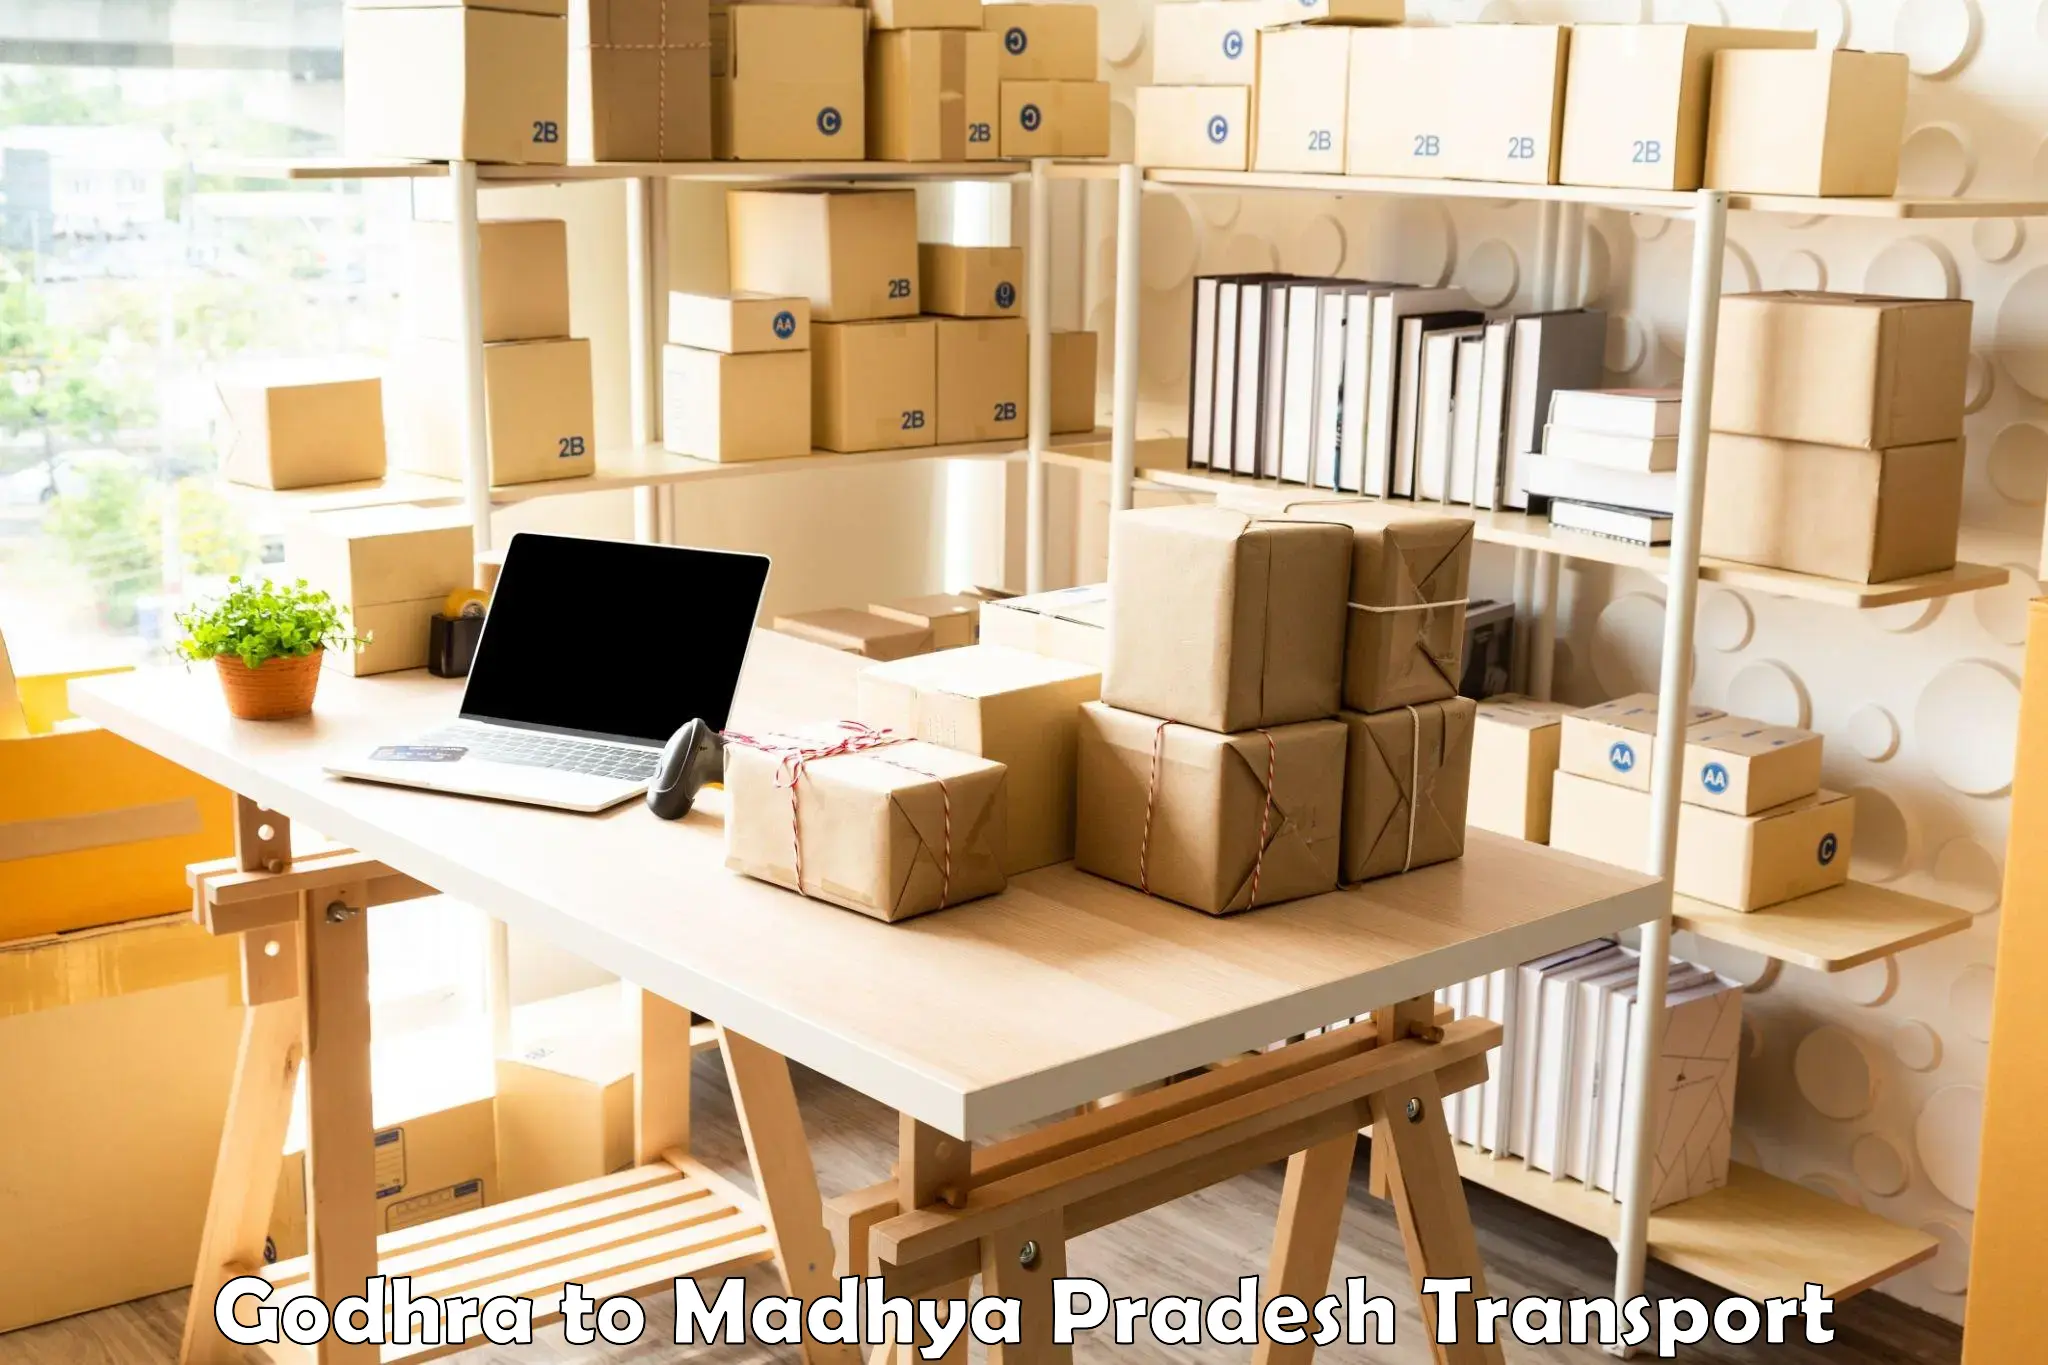 Shipping partner Godhra to Madhya Pradesh